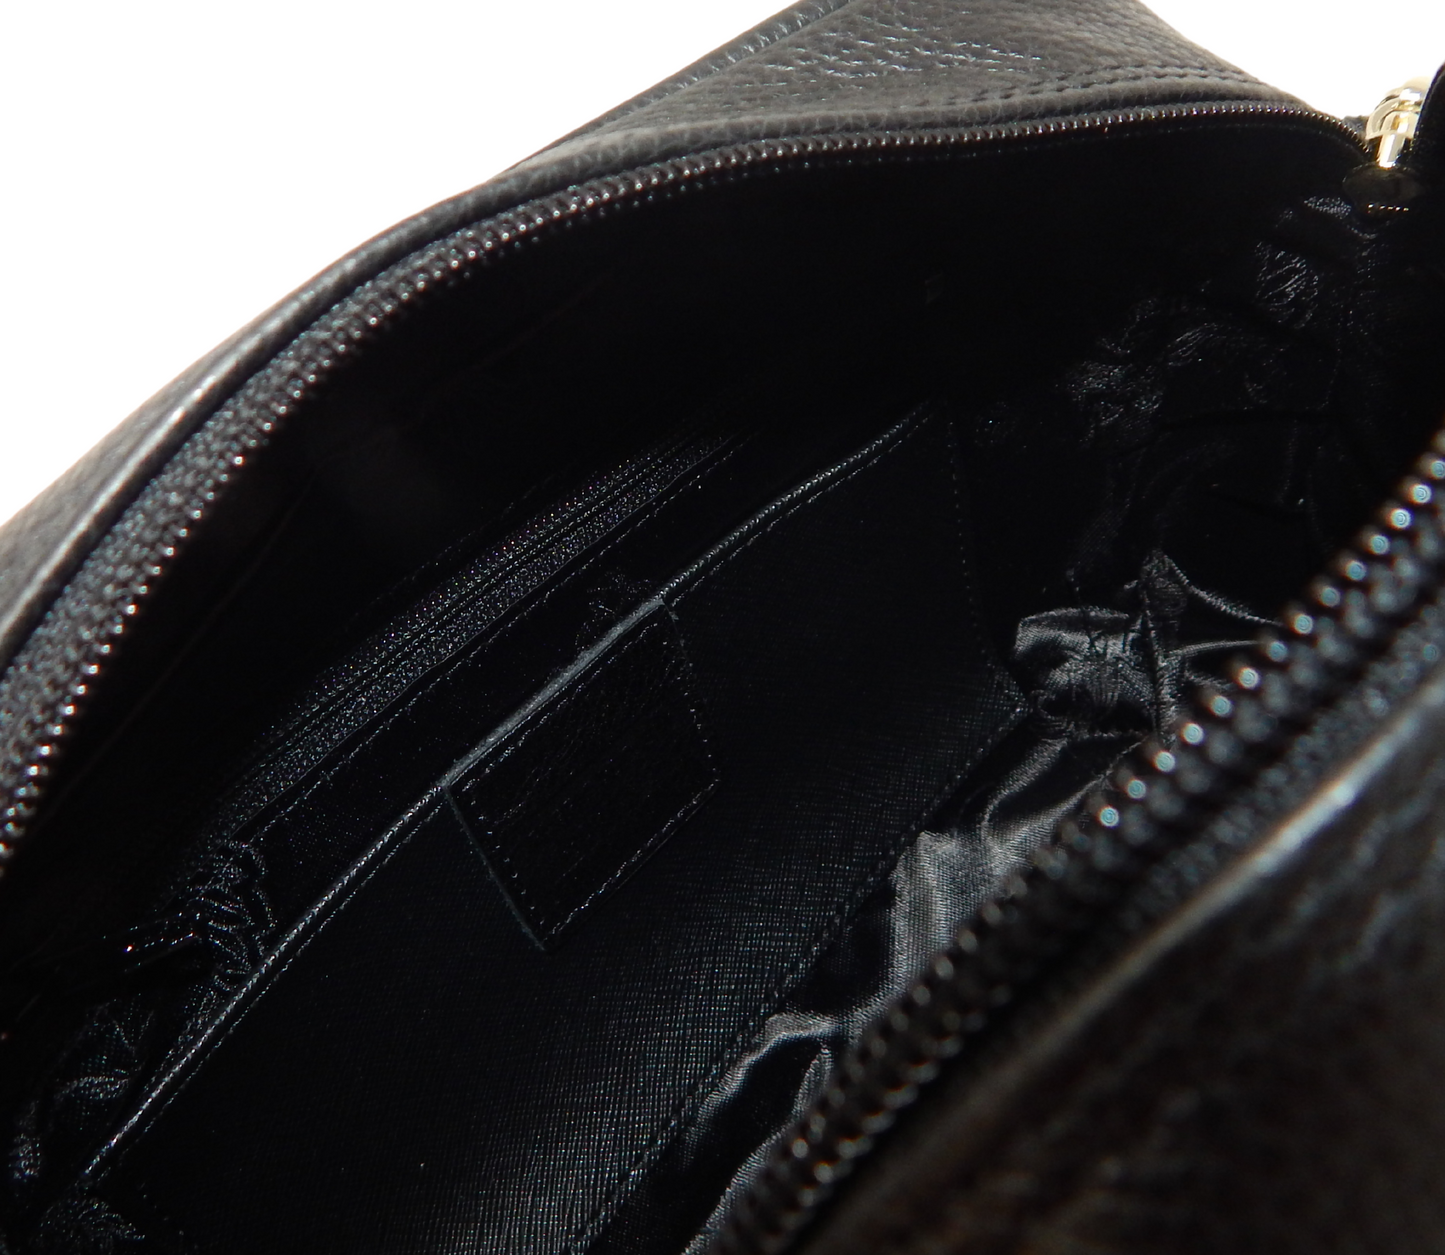 #color_ Black | Cavalinho Muse Leather Crossbody Bag - Black - 18300511.01_5